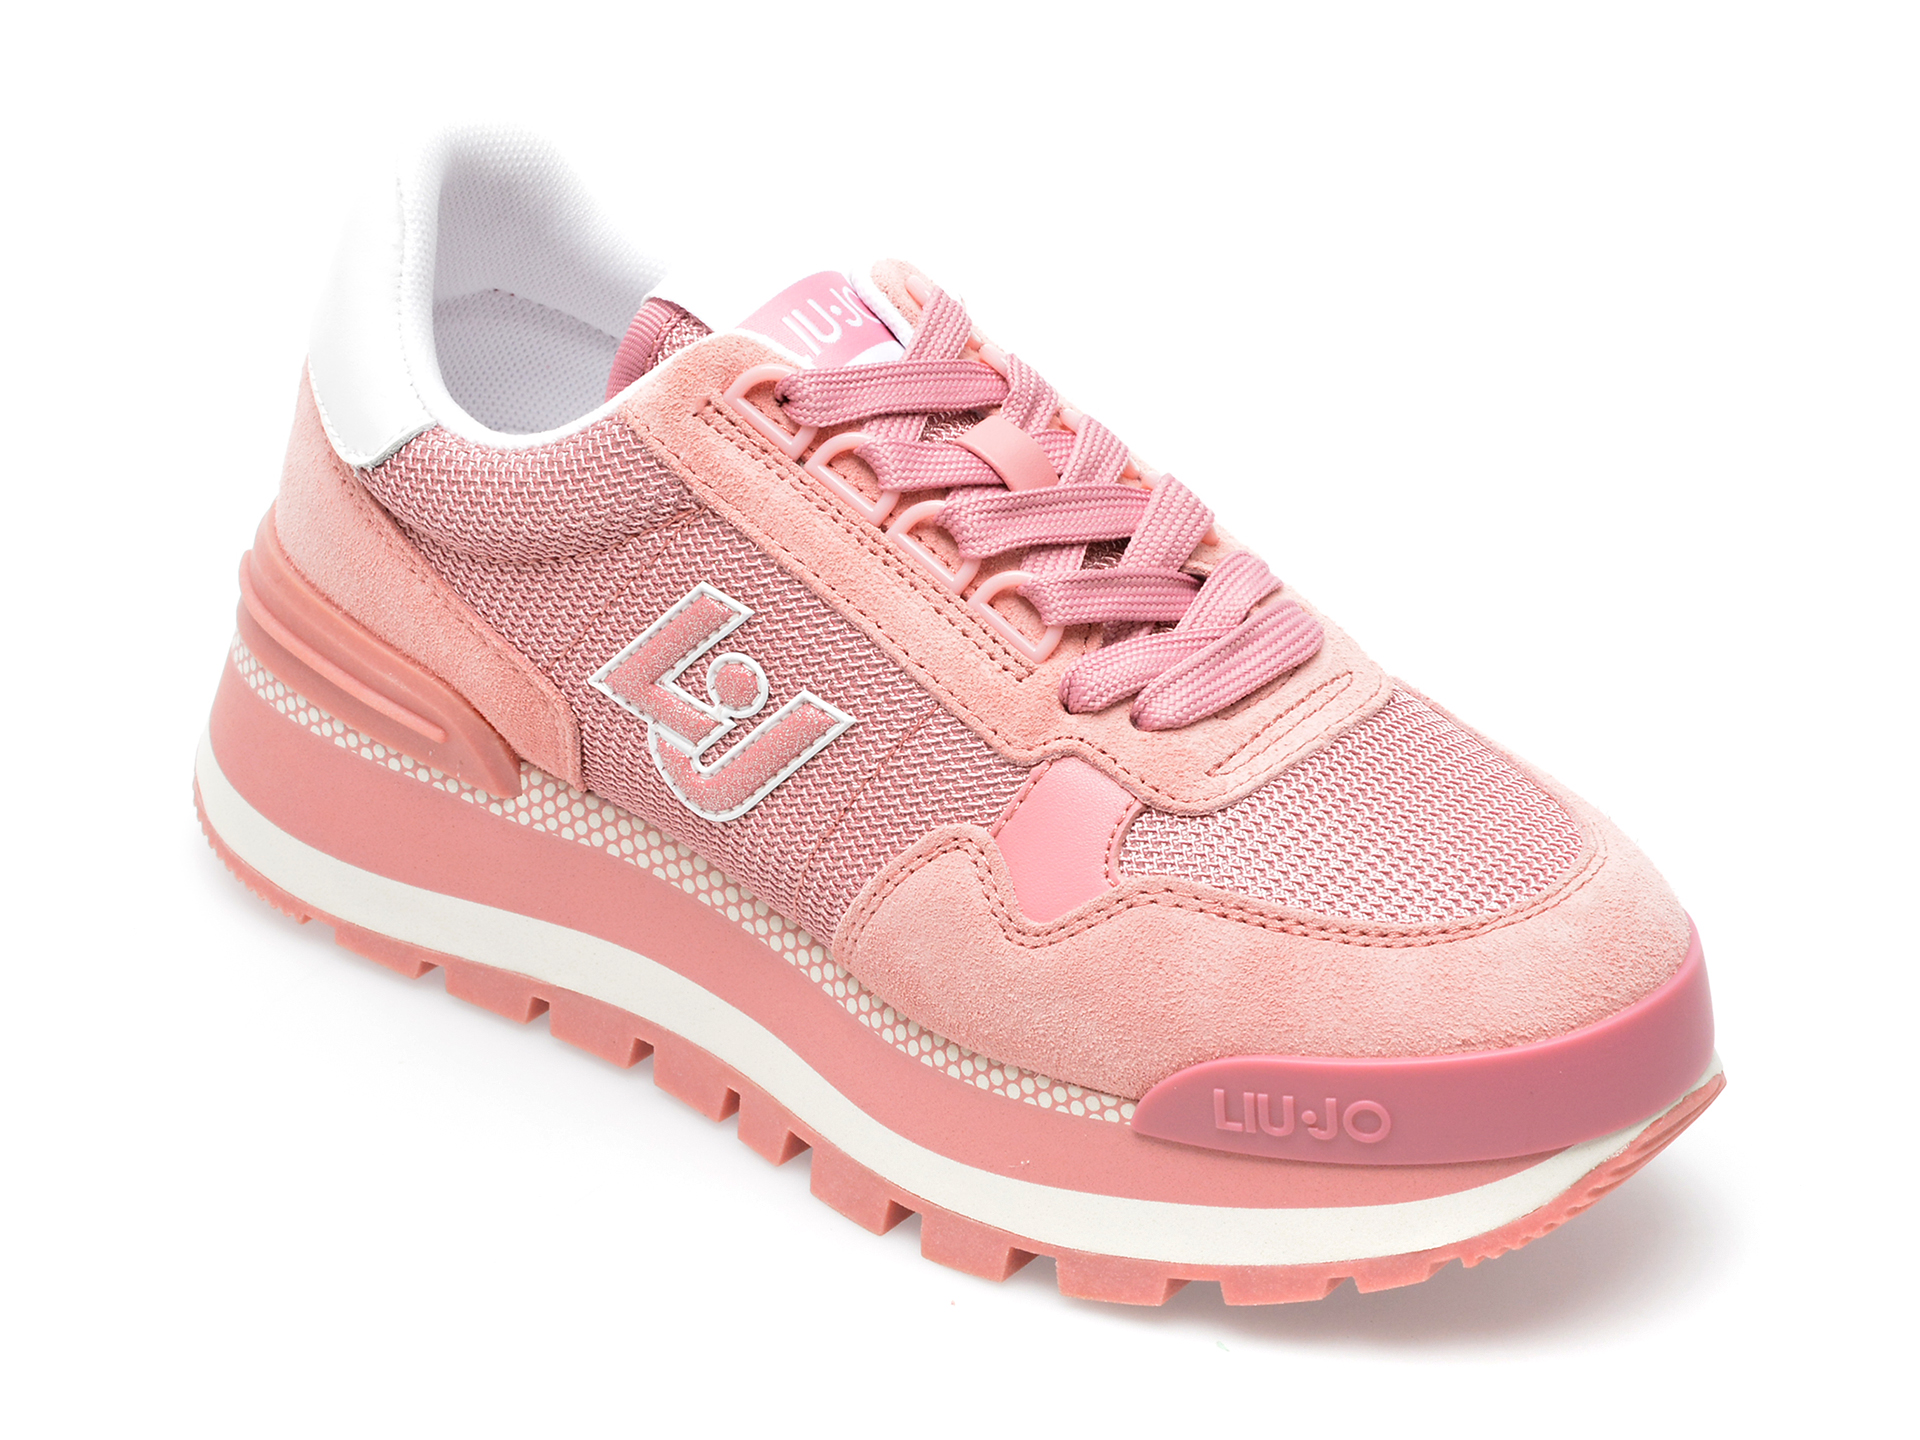 Pantofi sport LIU JO roz, AMAZI16, din material textil si piele intoarsa /colectii/primavara